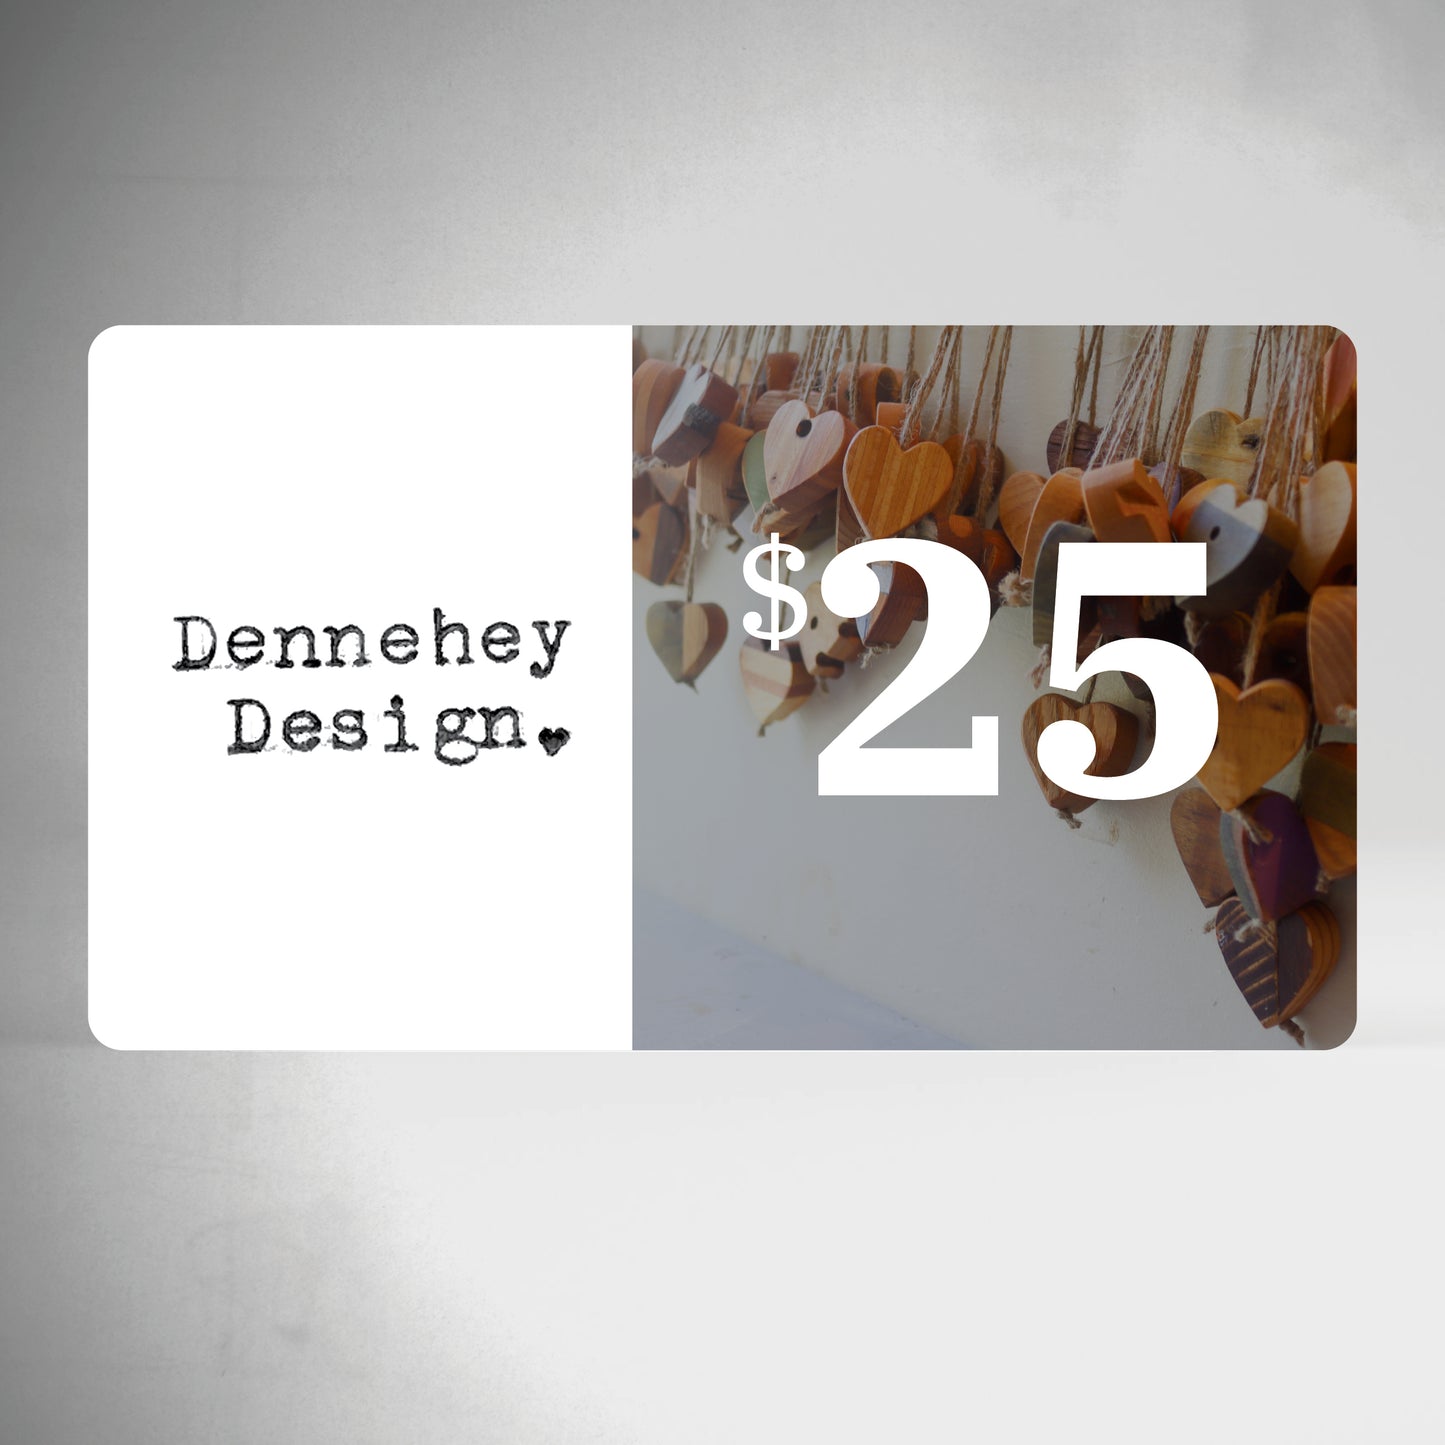 Dennehey Design Gift Cards